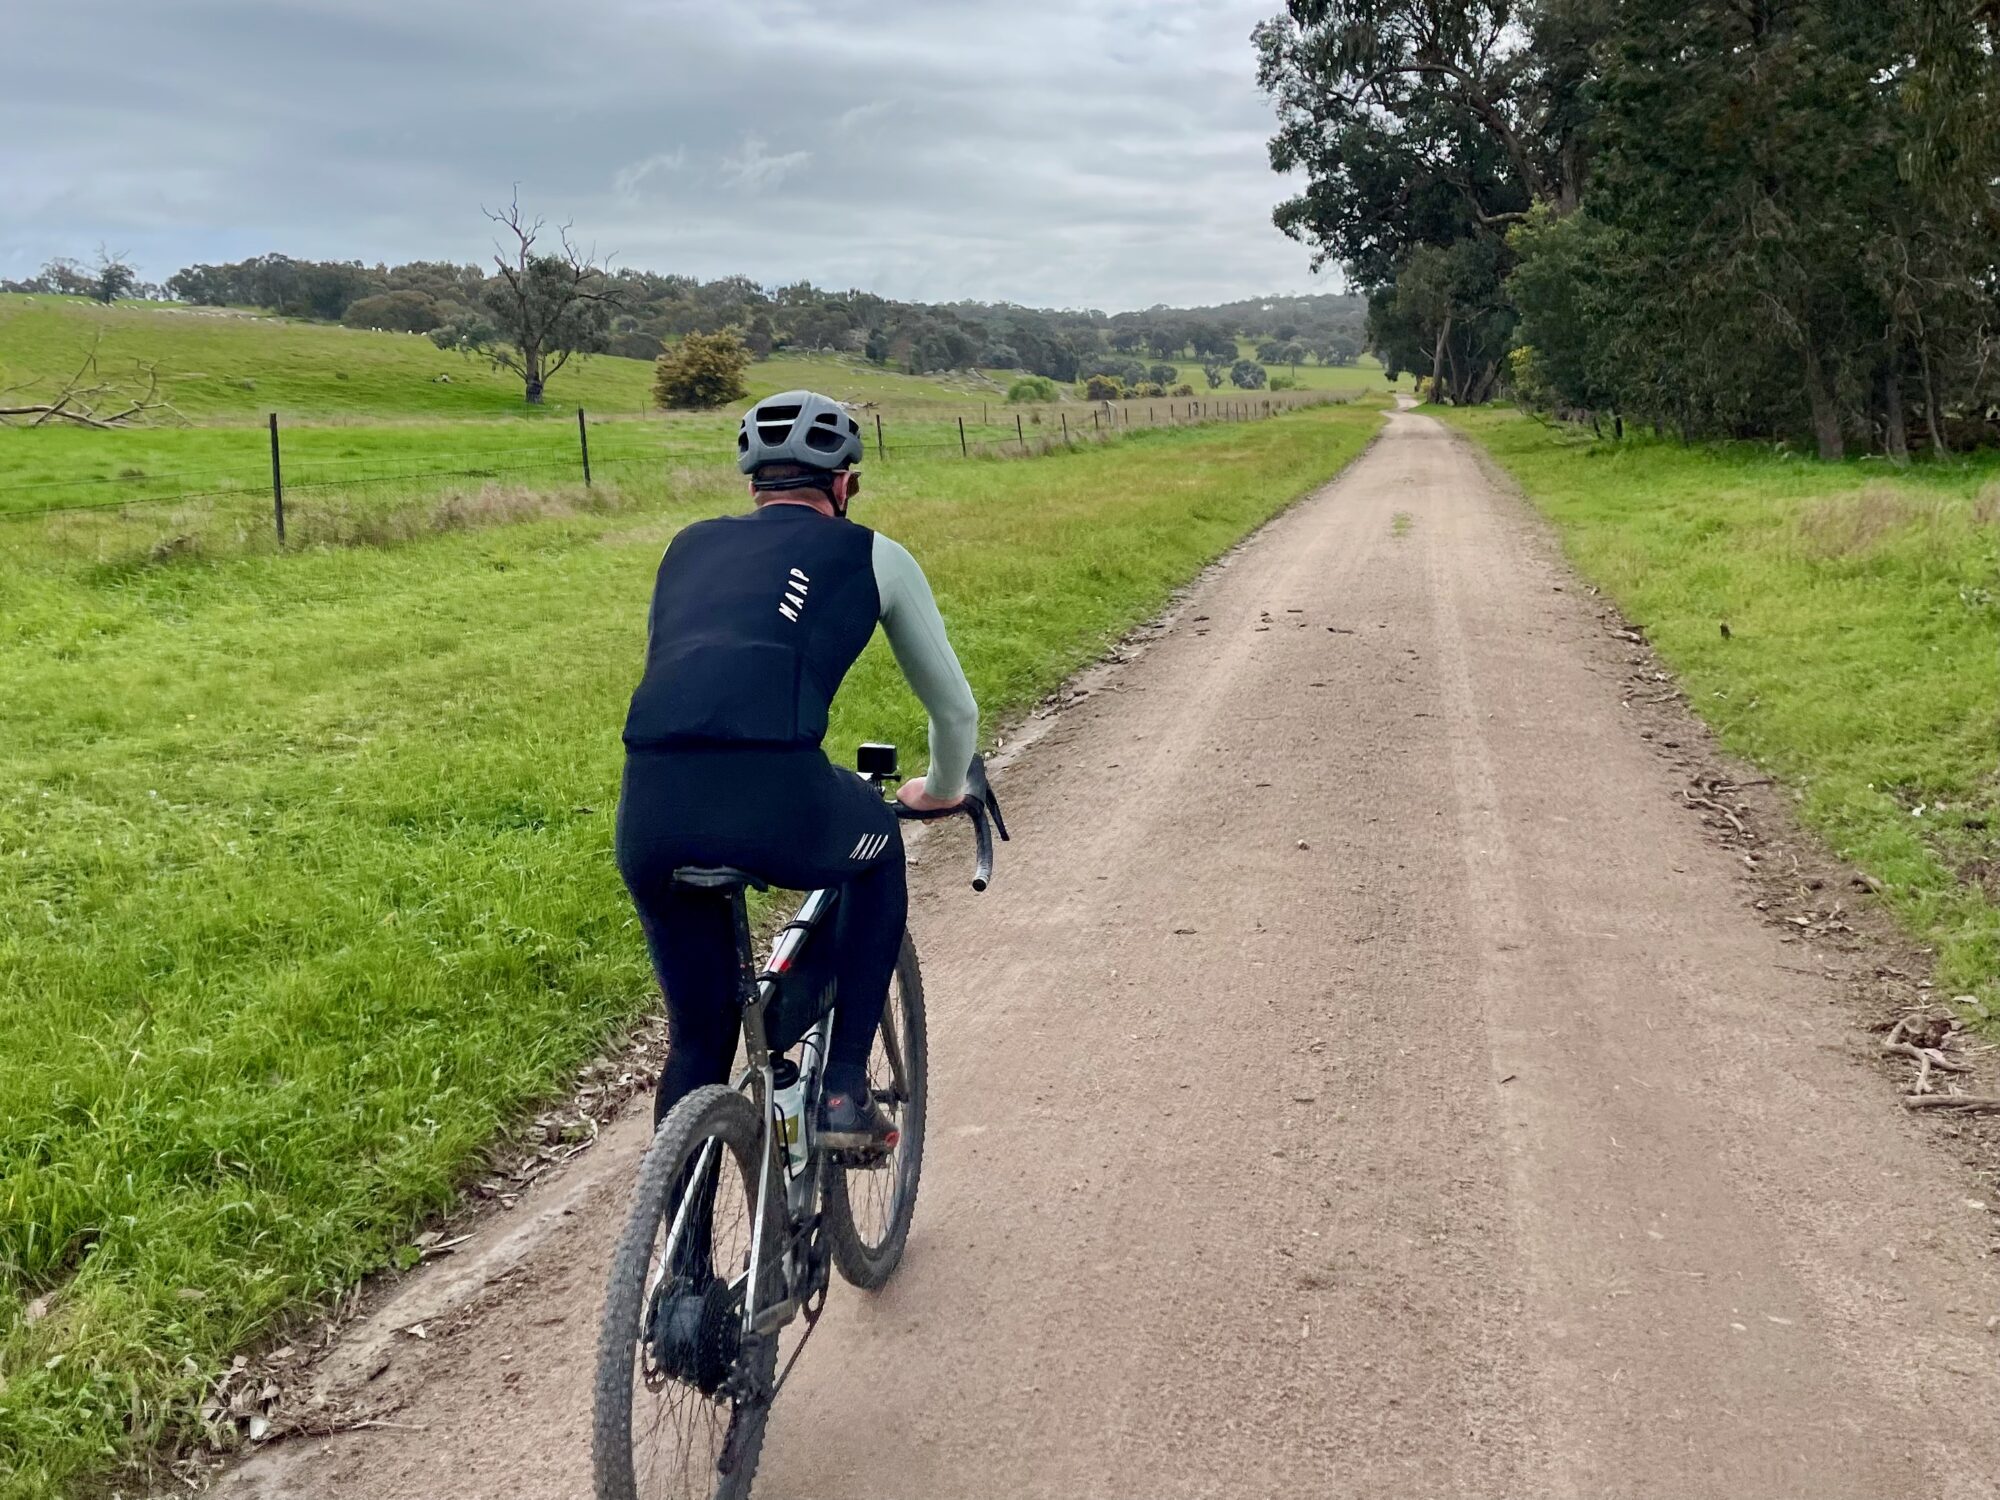 cyclist riding on smooth gravel road through open farmland